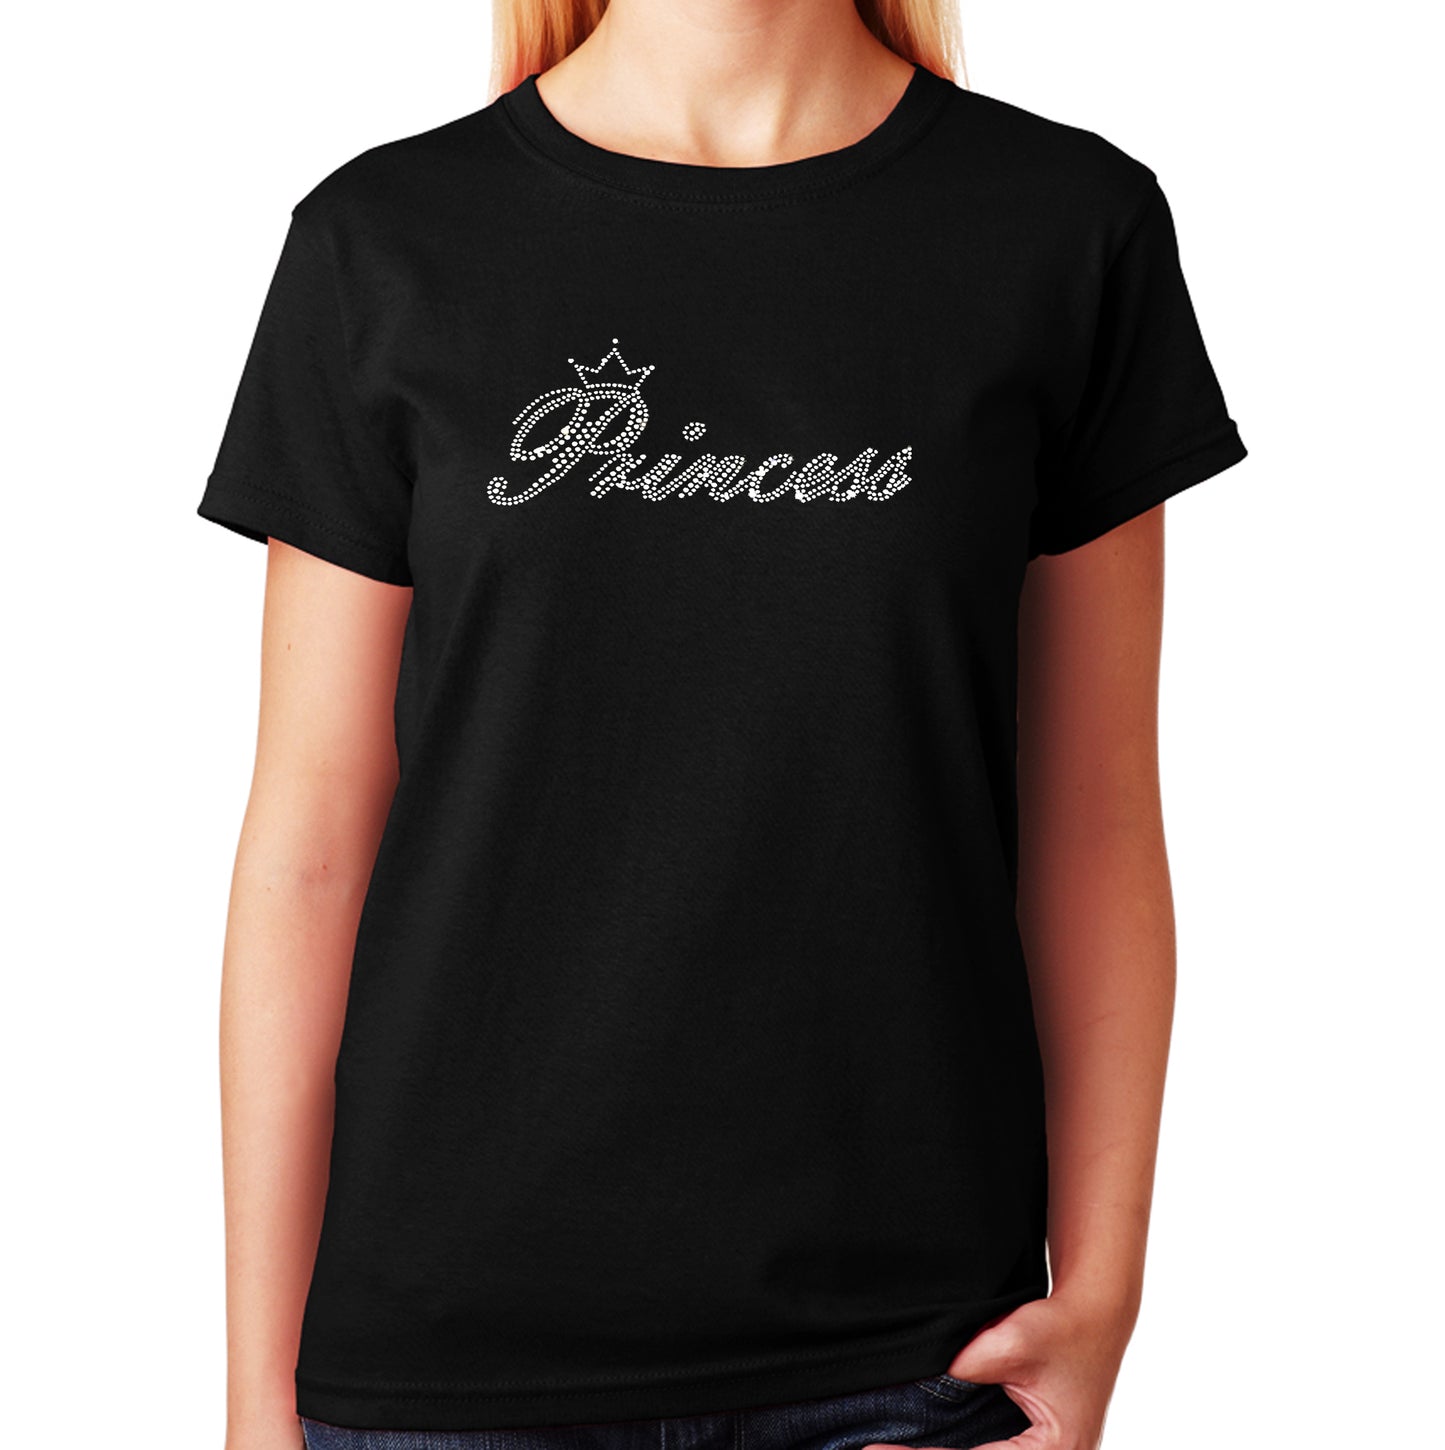 Women's / Unisex T-Shirt with Crystal Princess in Rhinestones